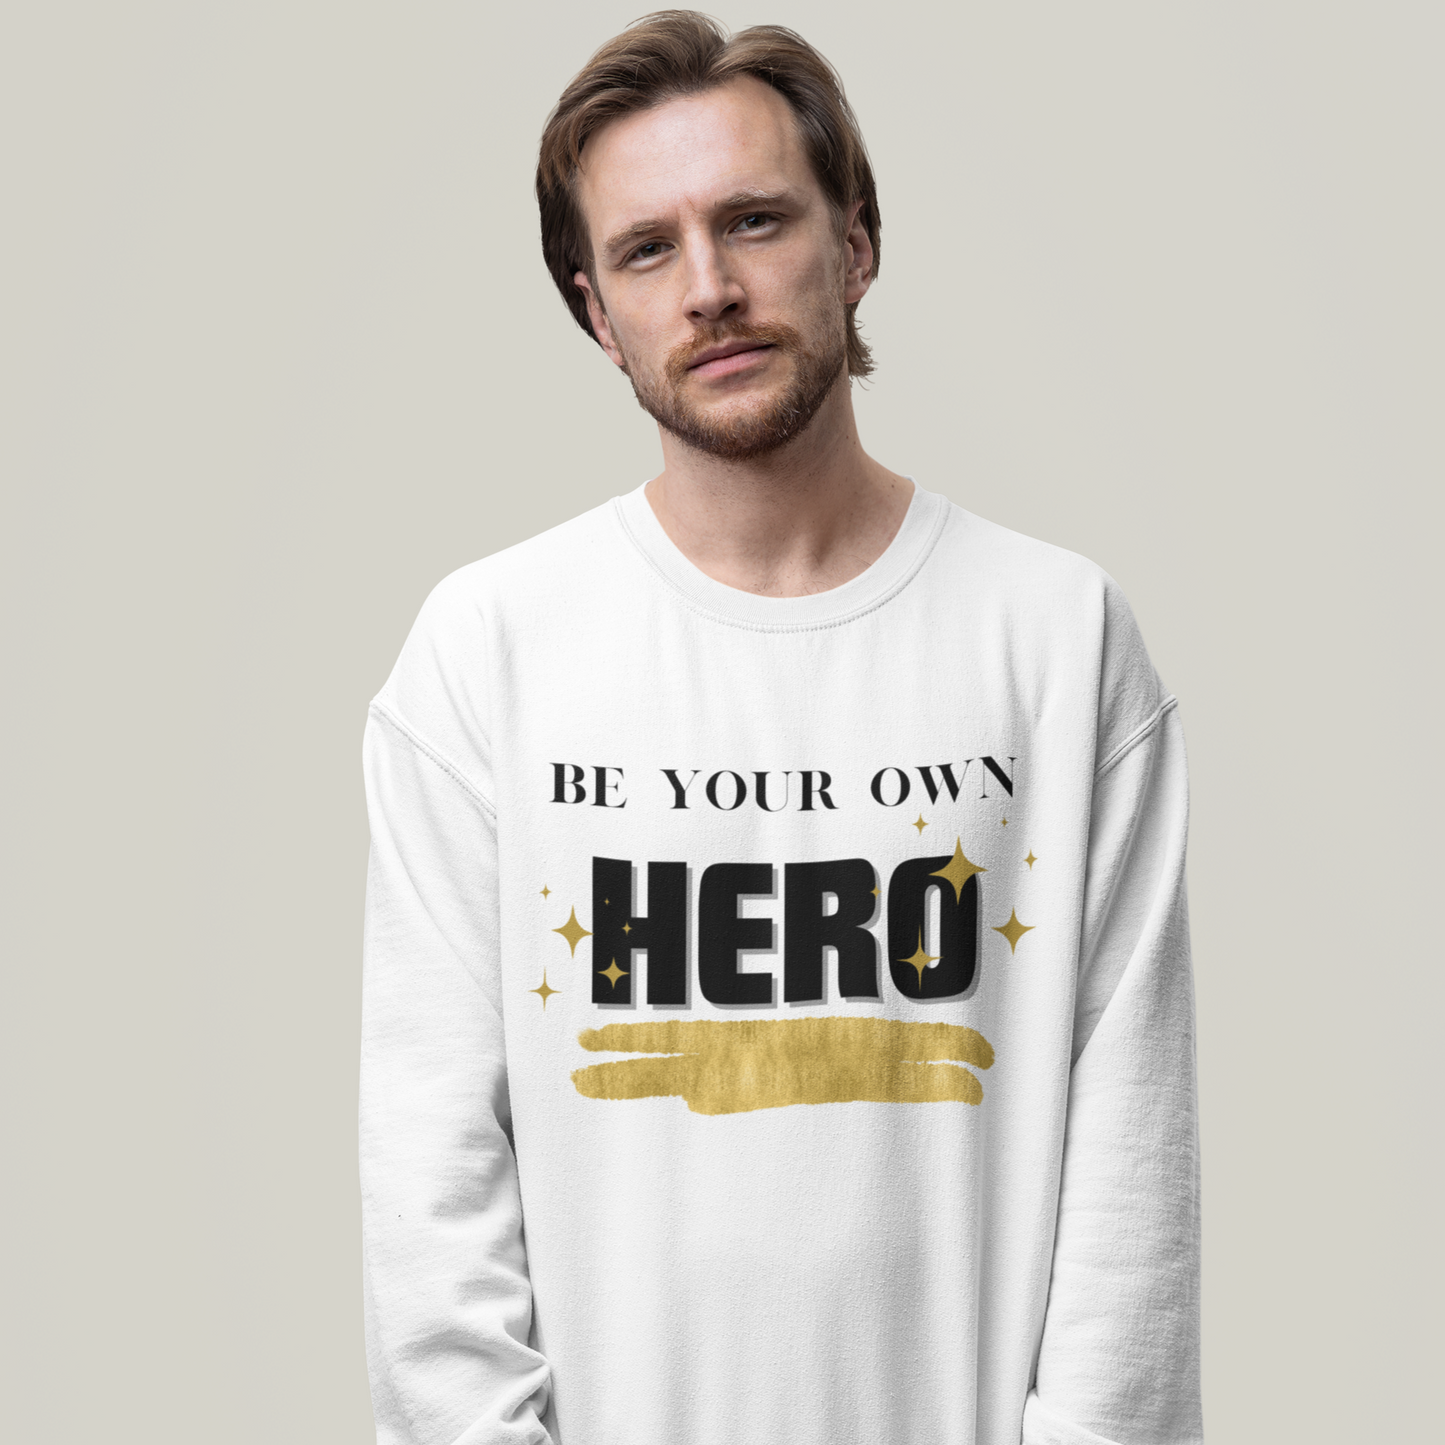 "Be Your Own Hero" - Sweatshirt Unisex